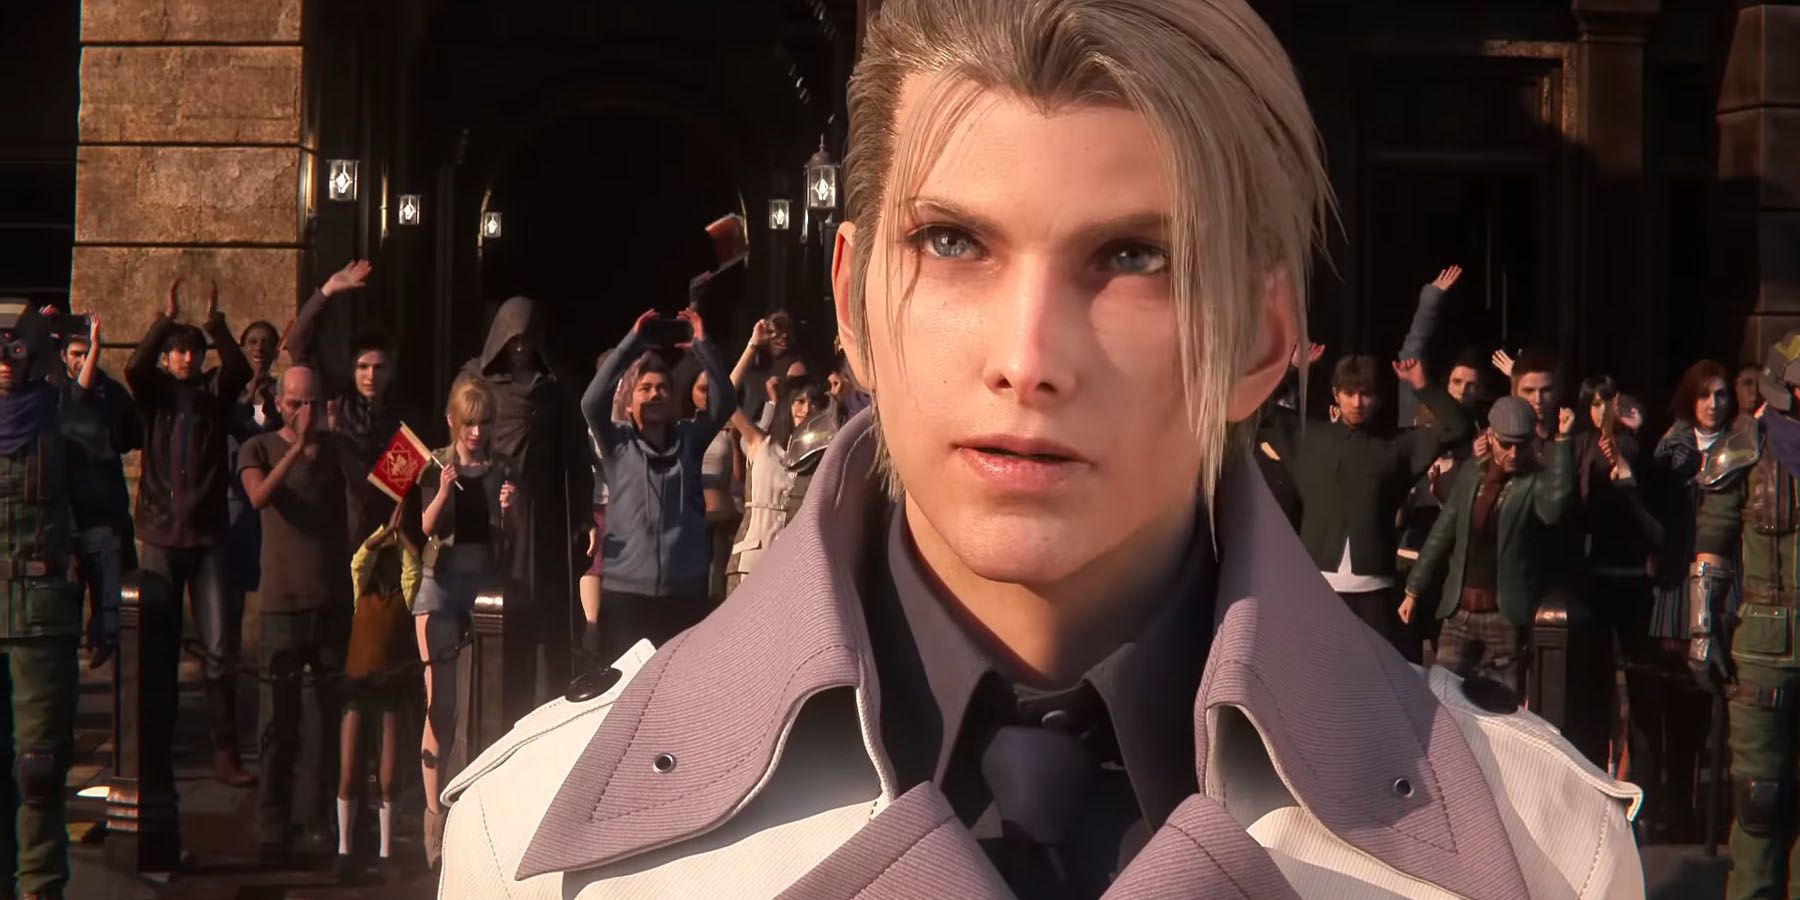 Final Fantasy VII Rebirth is still on track according to